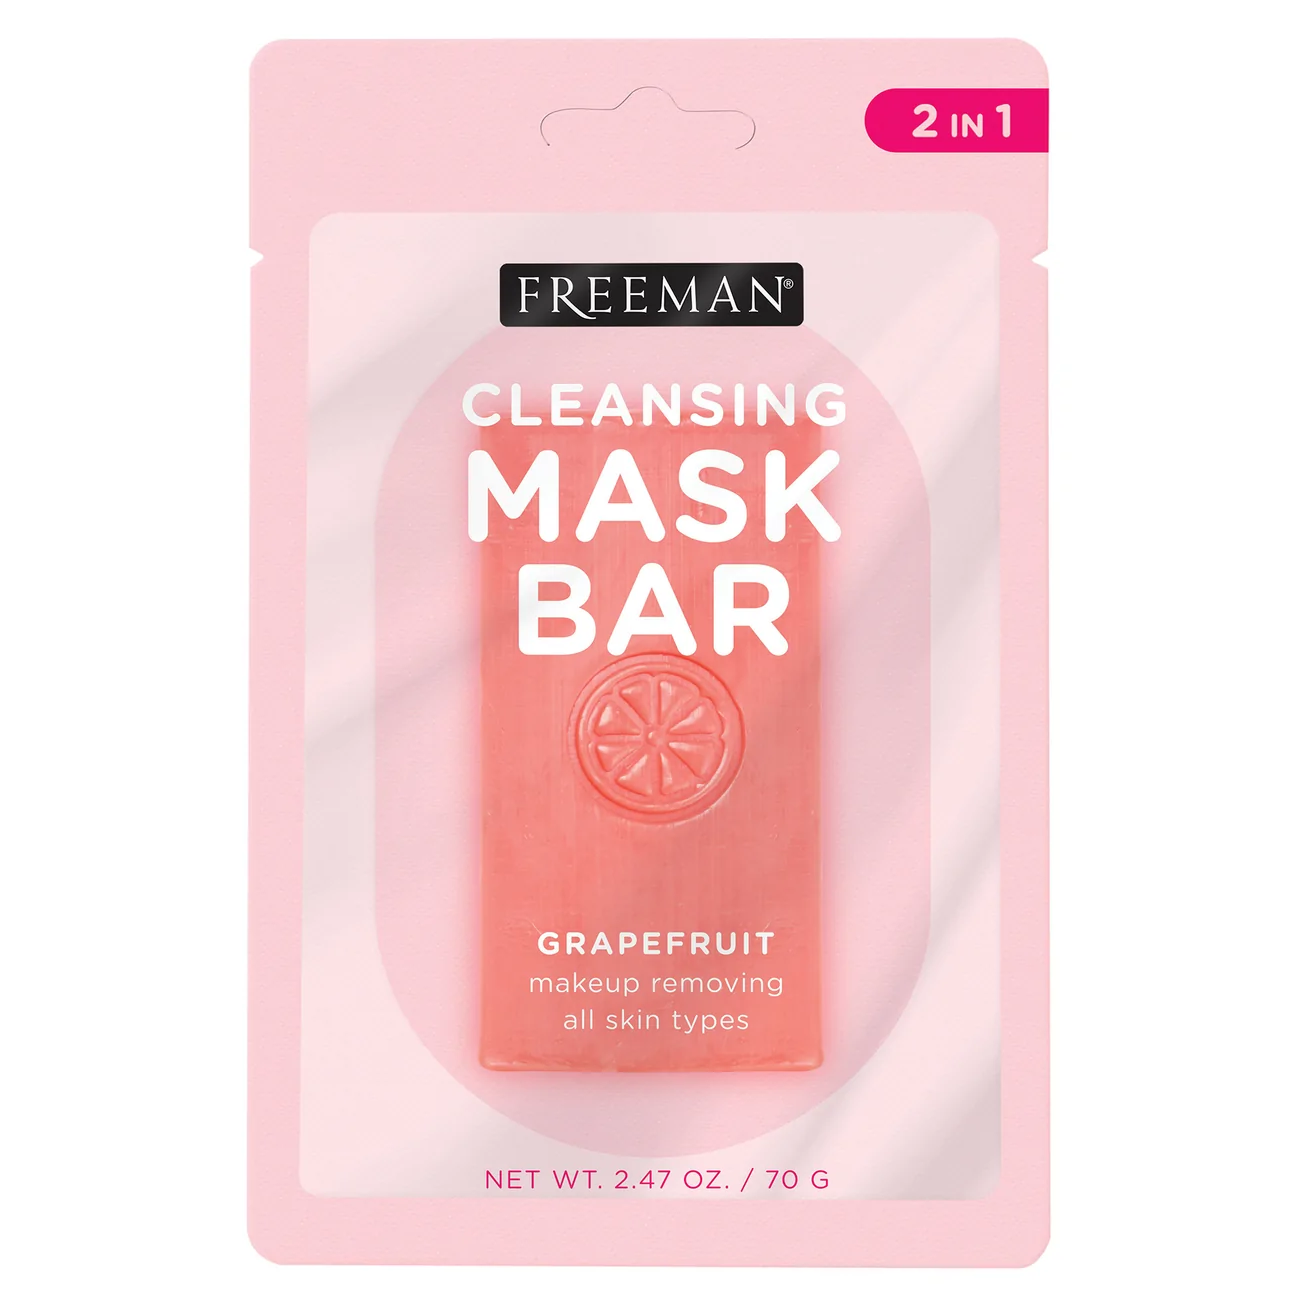 FREEMAN Cleansing Mask Bar Grapefruit Makeup Removing – LA FEMME BEAUTY